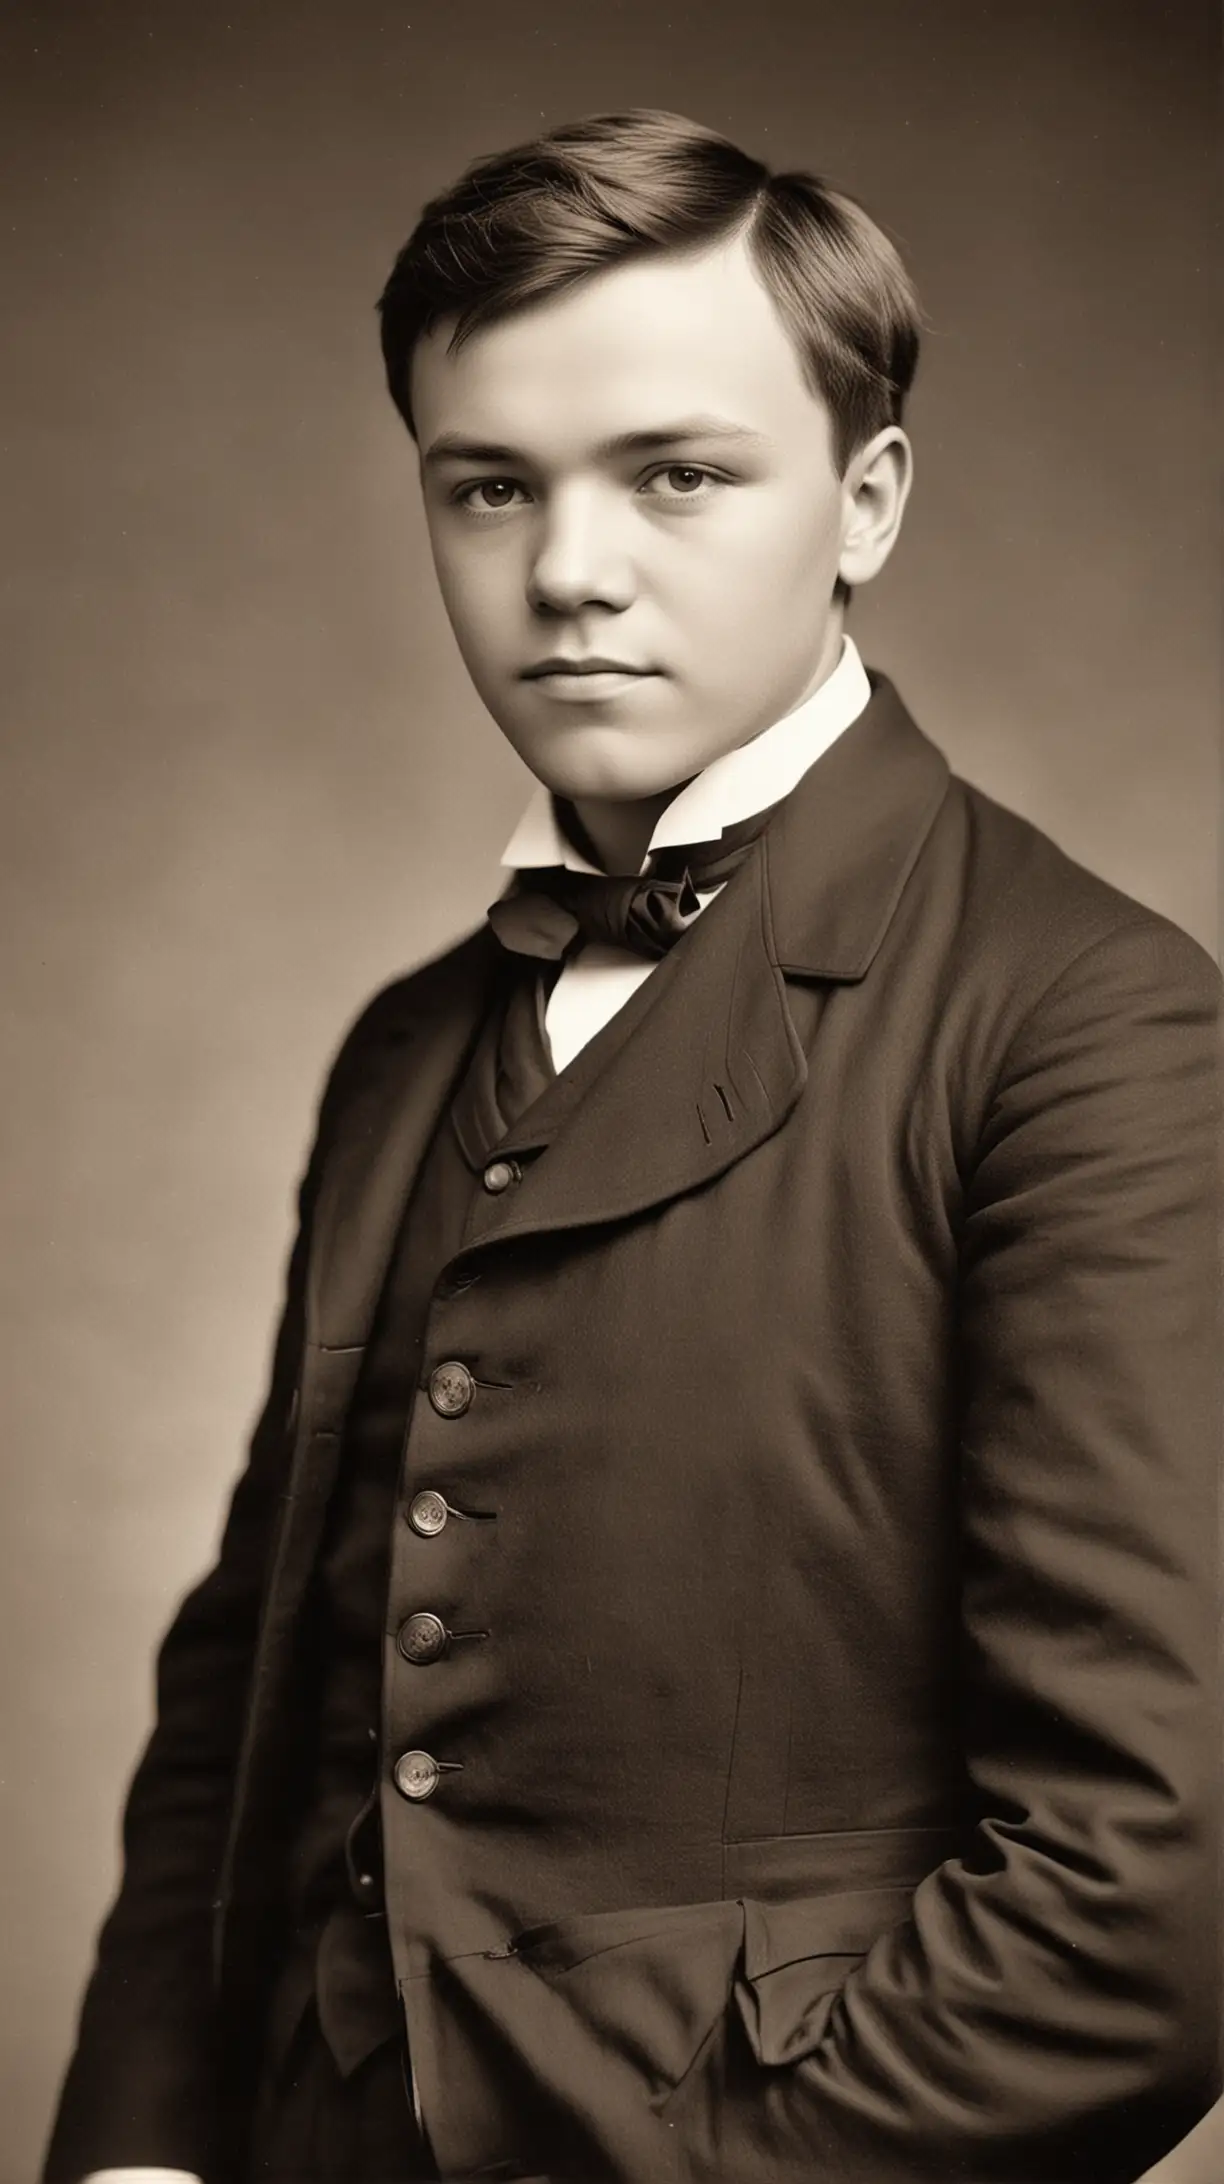 Andrew Carnegie Teenage Portrait in Monochrome